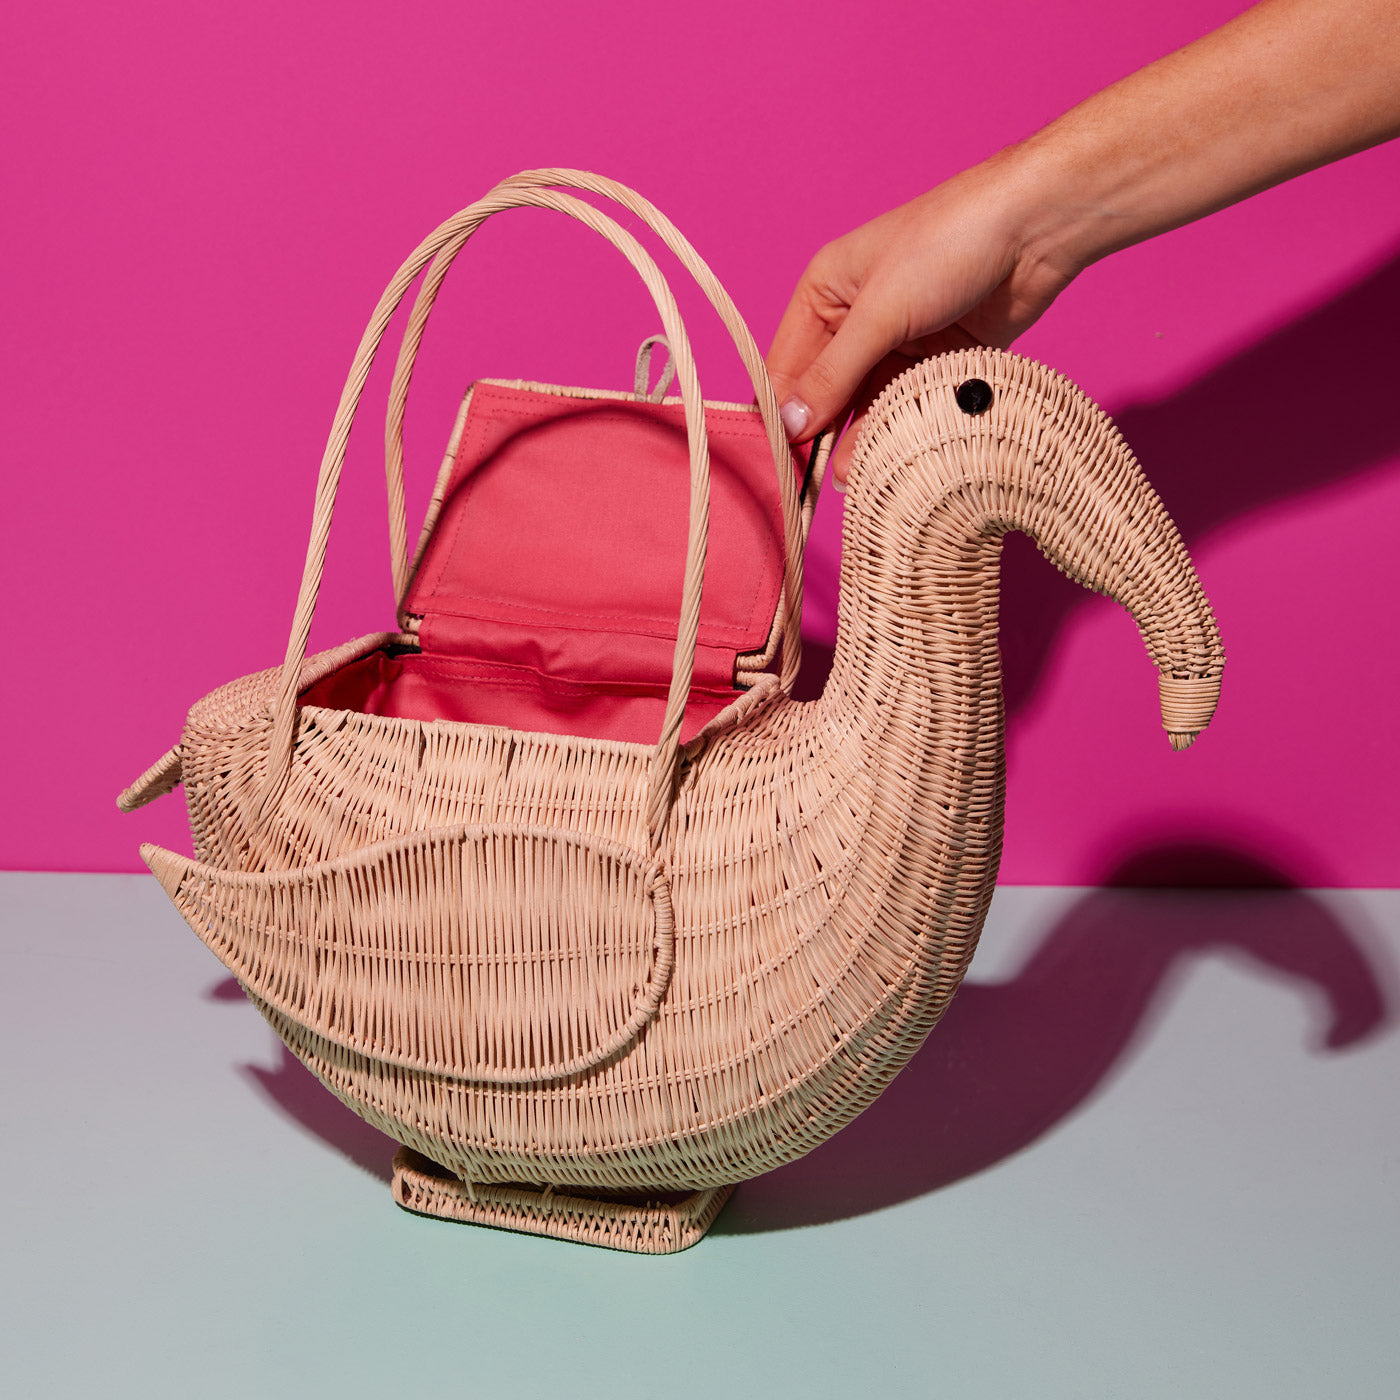 Wicker Darling DIY flamingo bag on a pink background